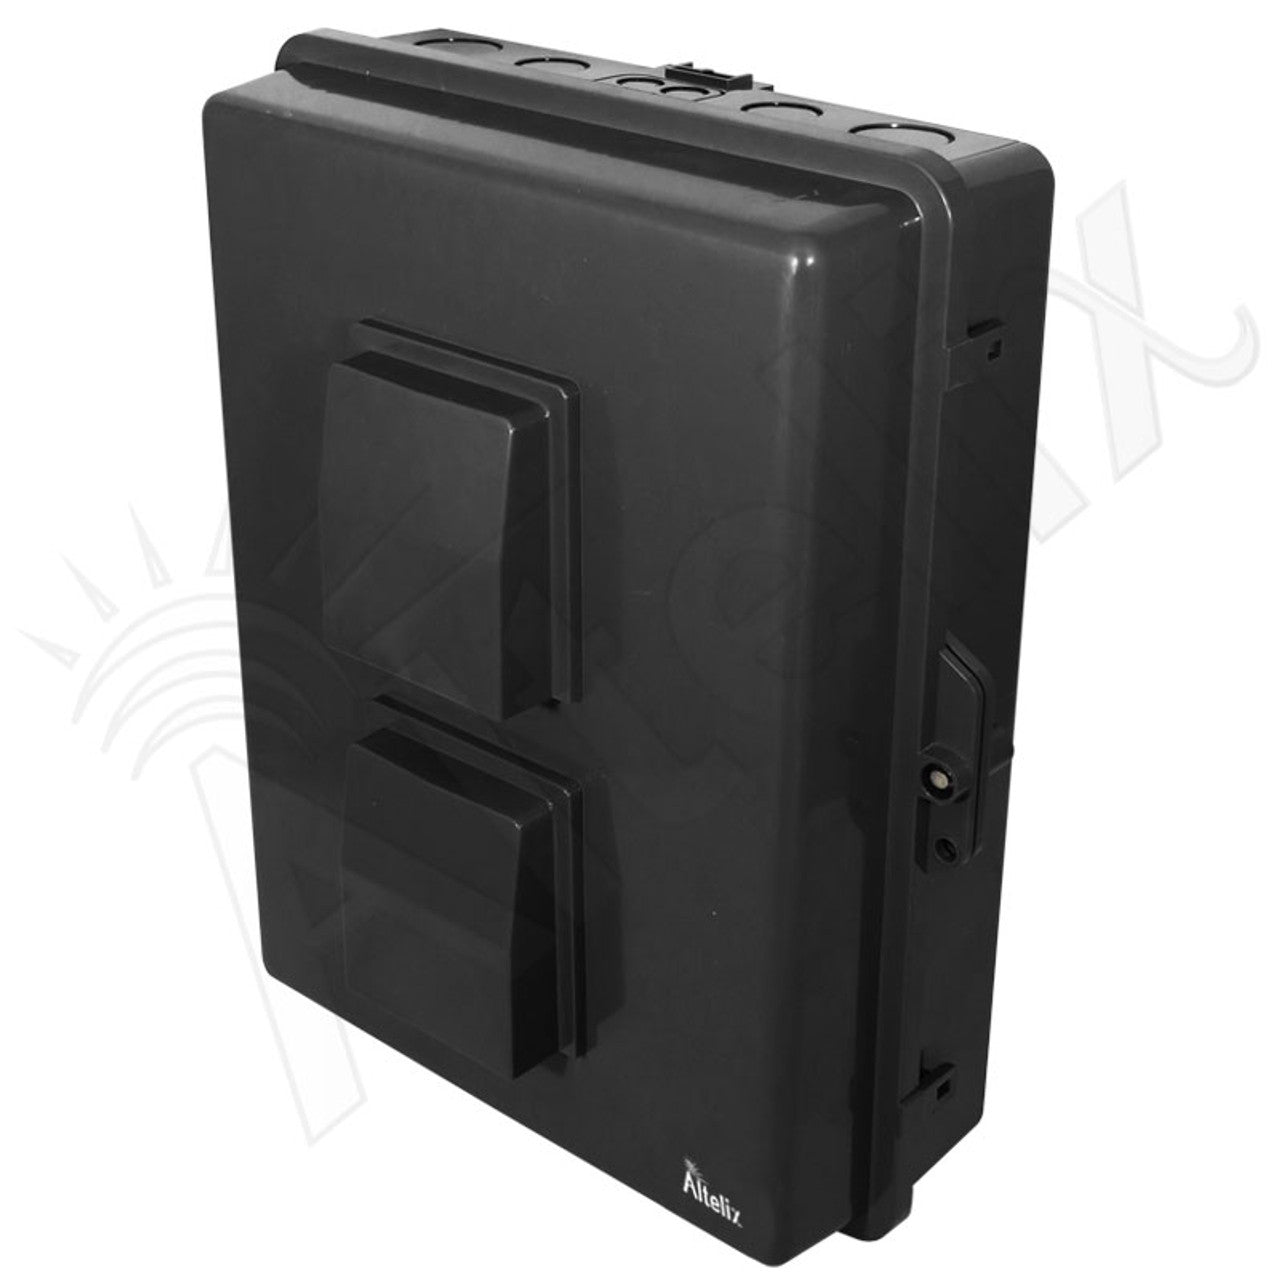 Altelix 17x14x6 PC + ABS Weatherproof Vented Utility Box NEMA Enclosure with Heavy Duty Pole Mount Kit